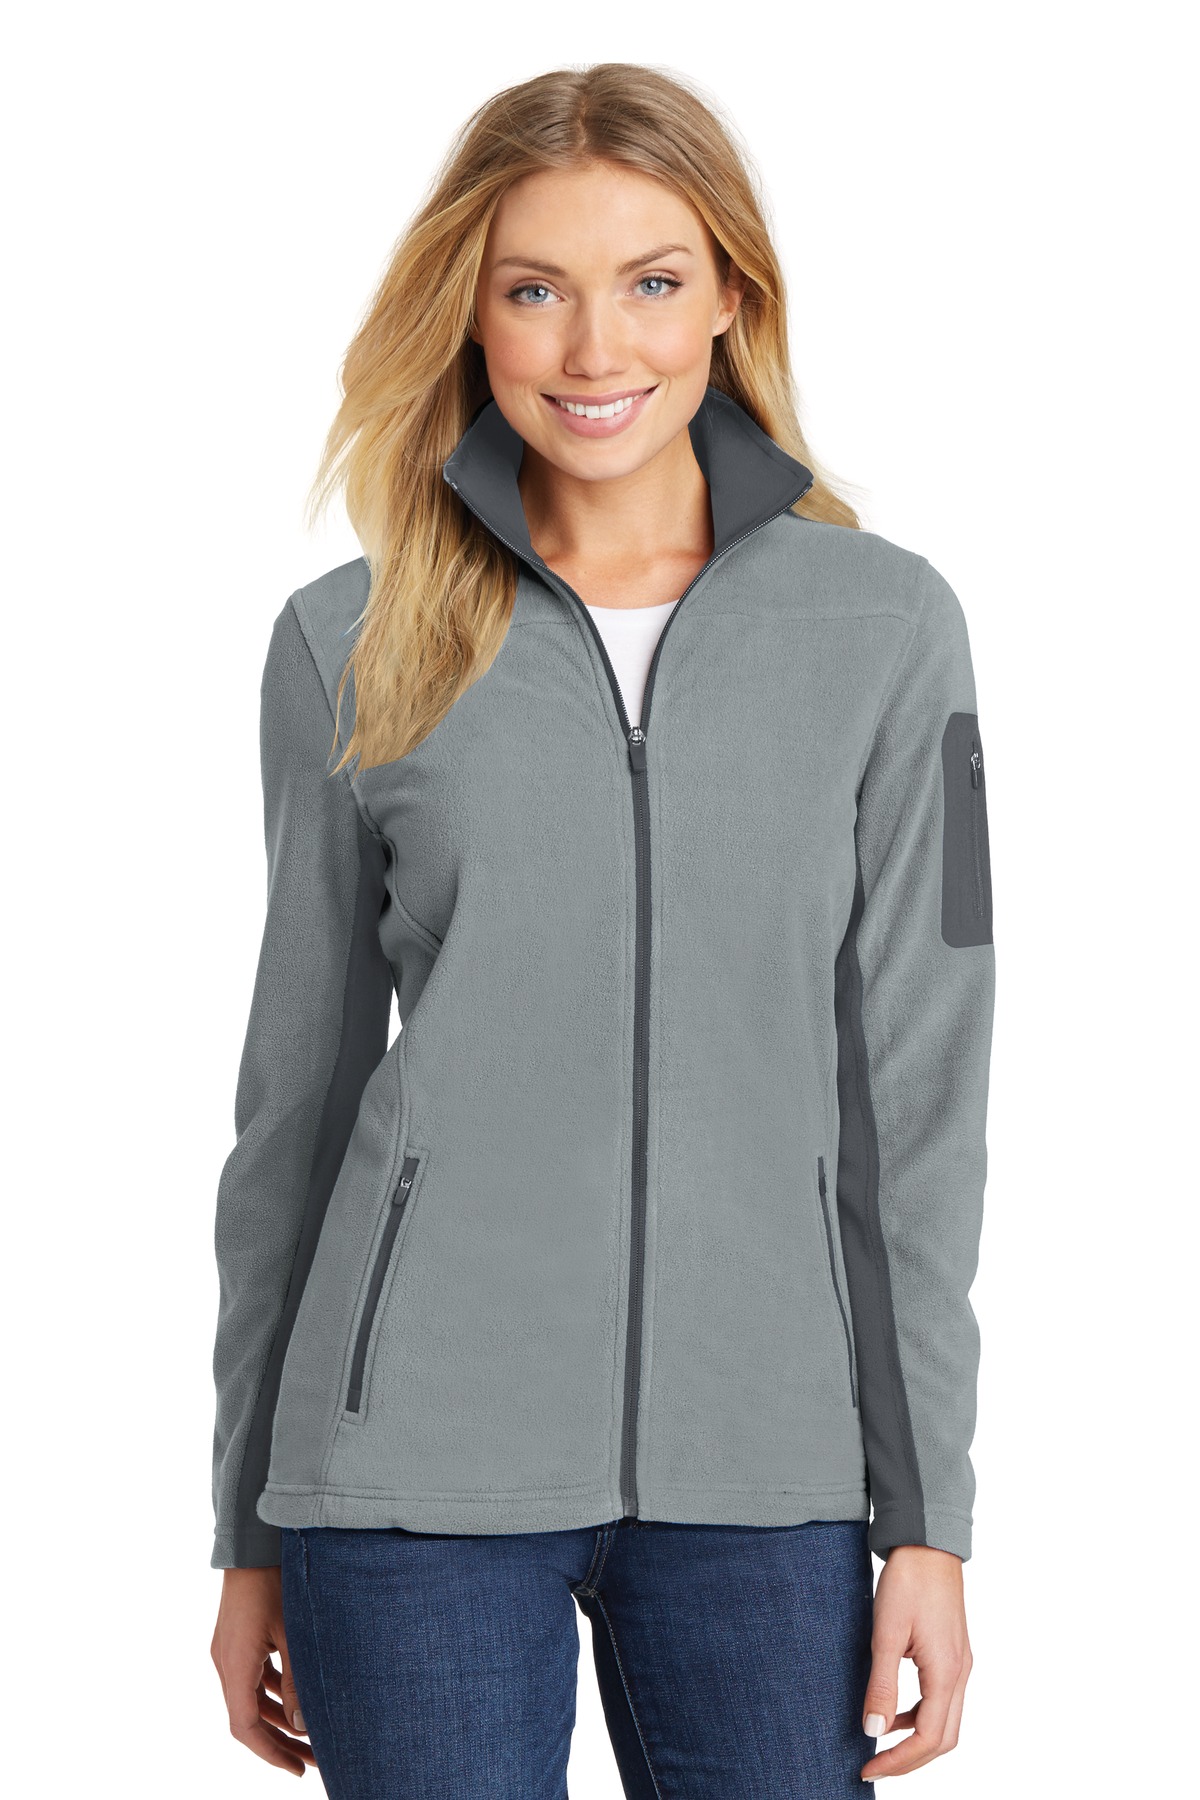 Port Authority  L233 - Ladies Summit Fleece Full-Zip Jacket